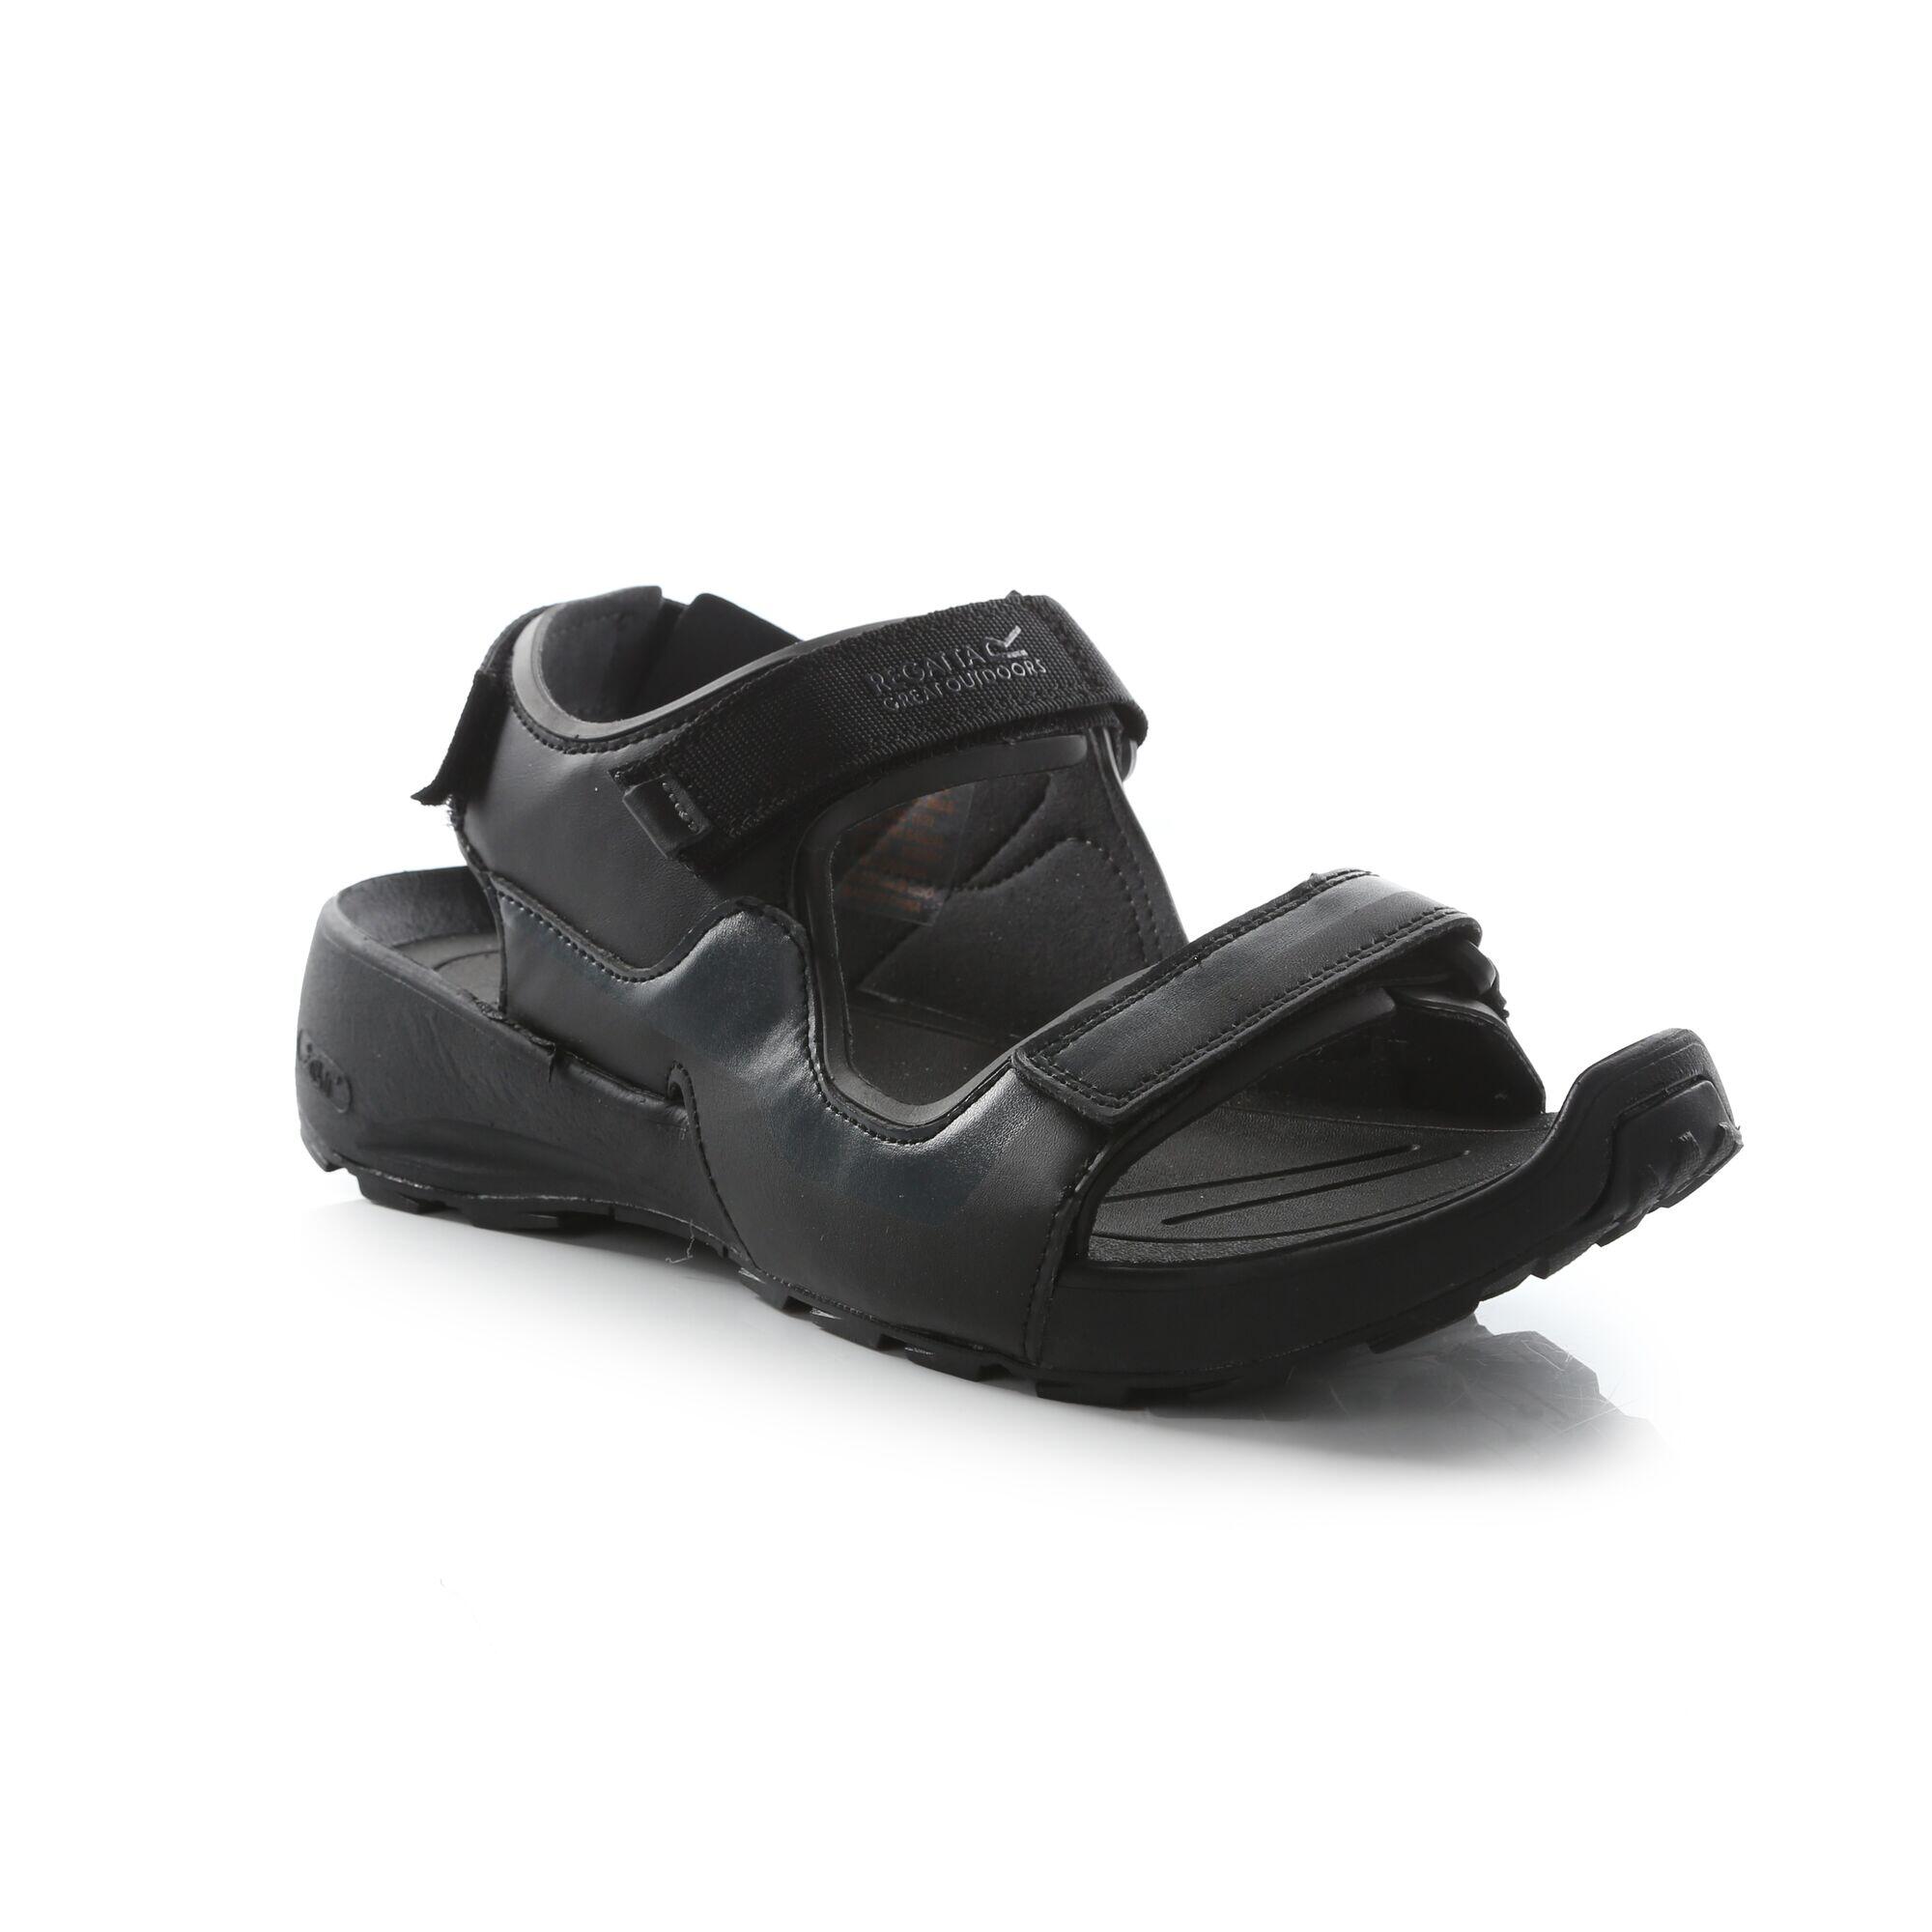 REGATTA Samaris Men's Walking Sandals - Black Briar